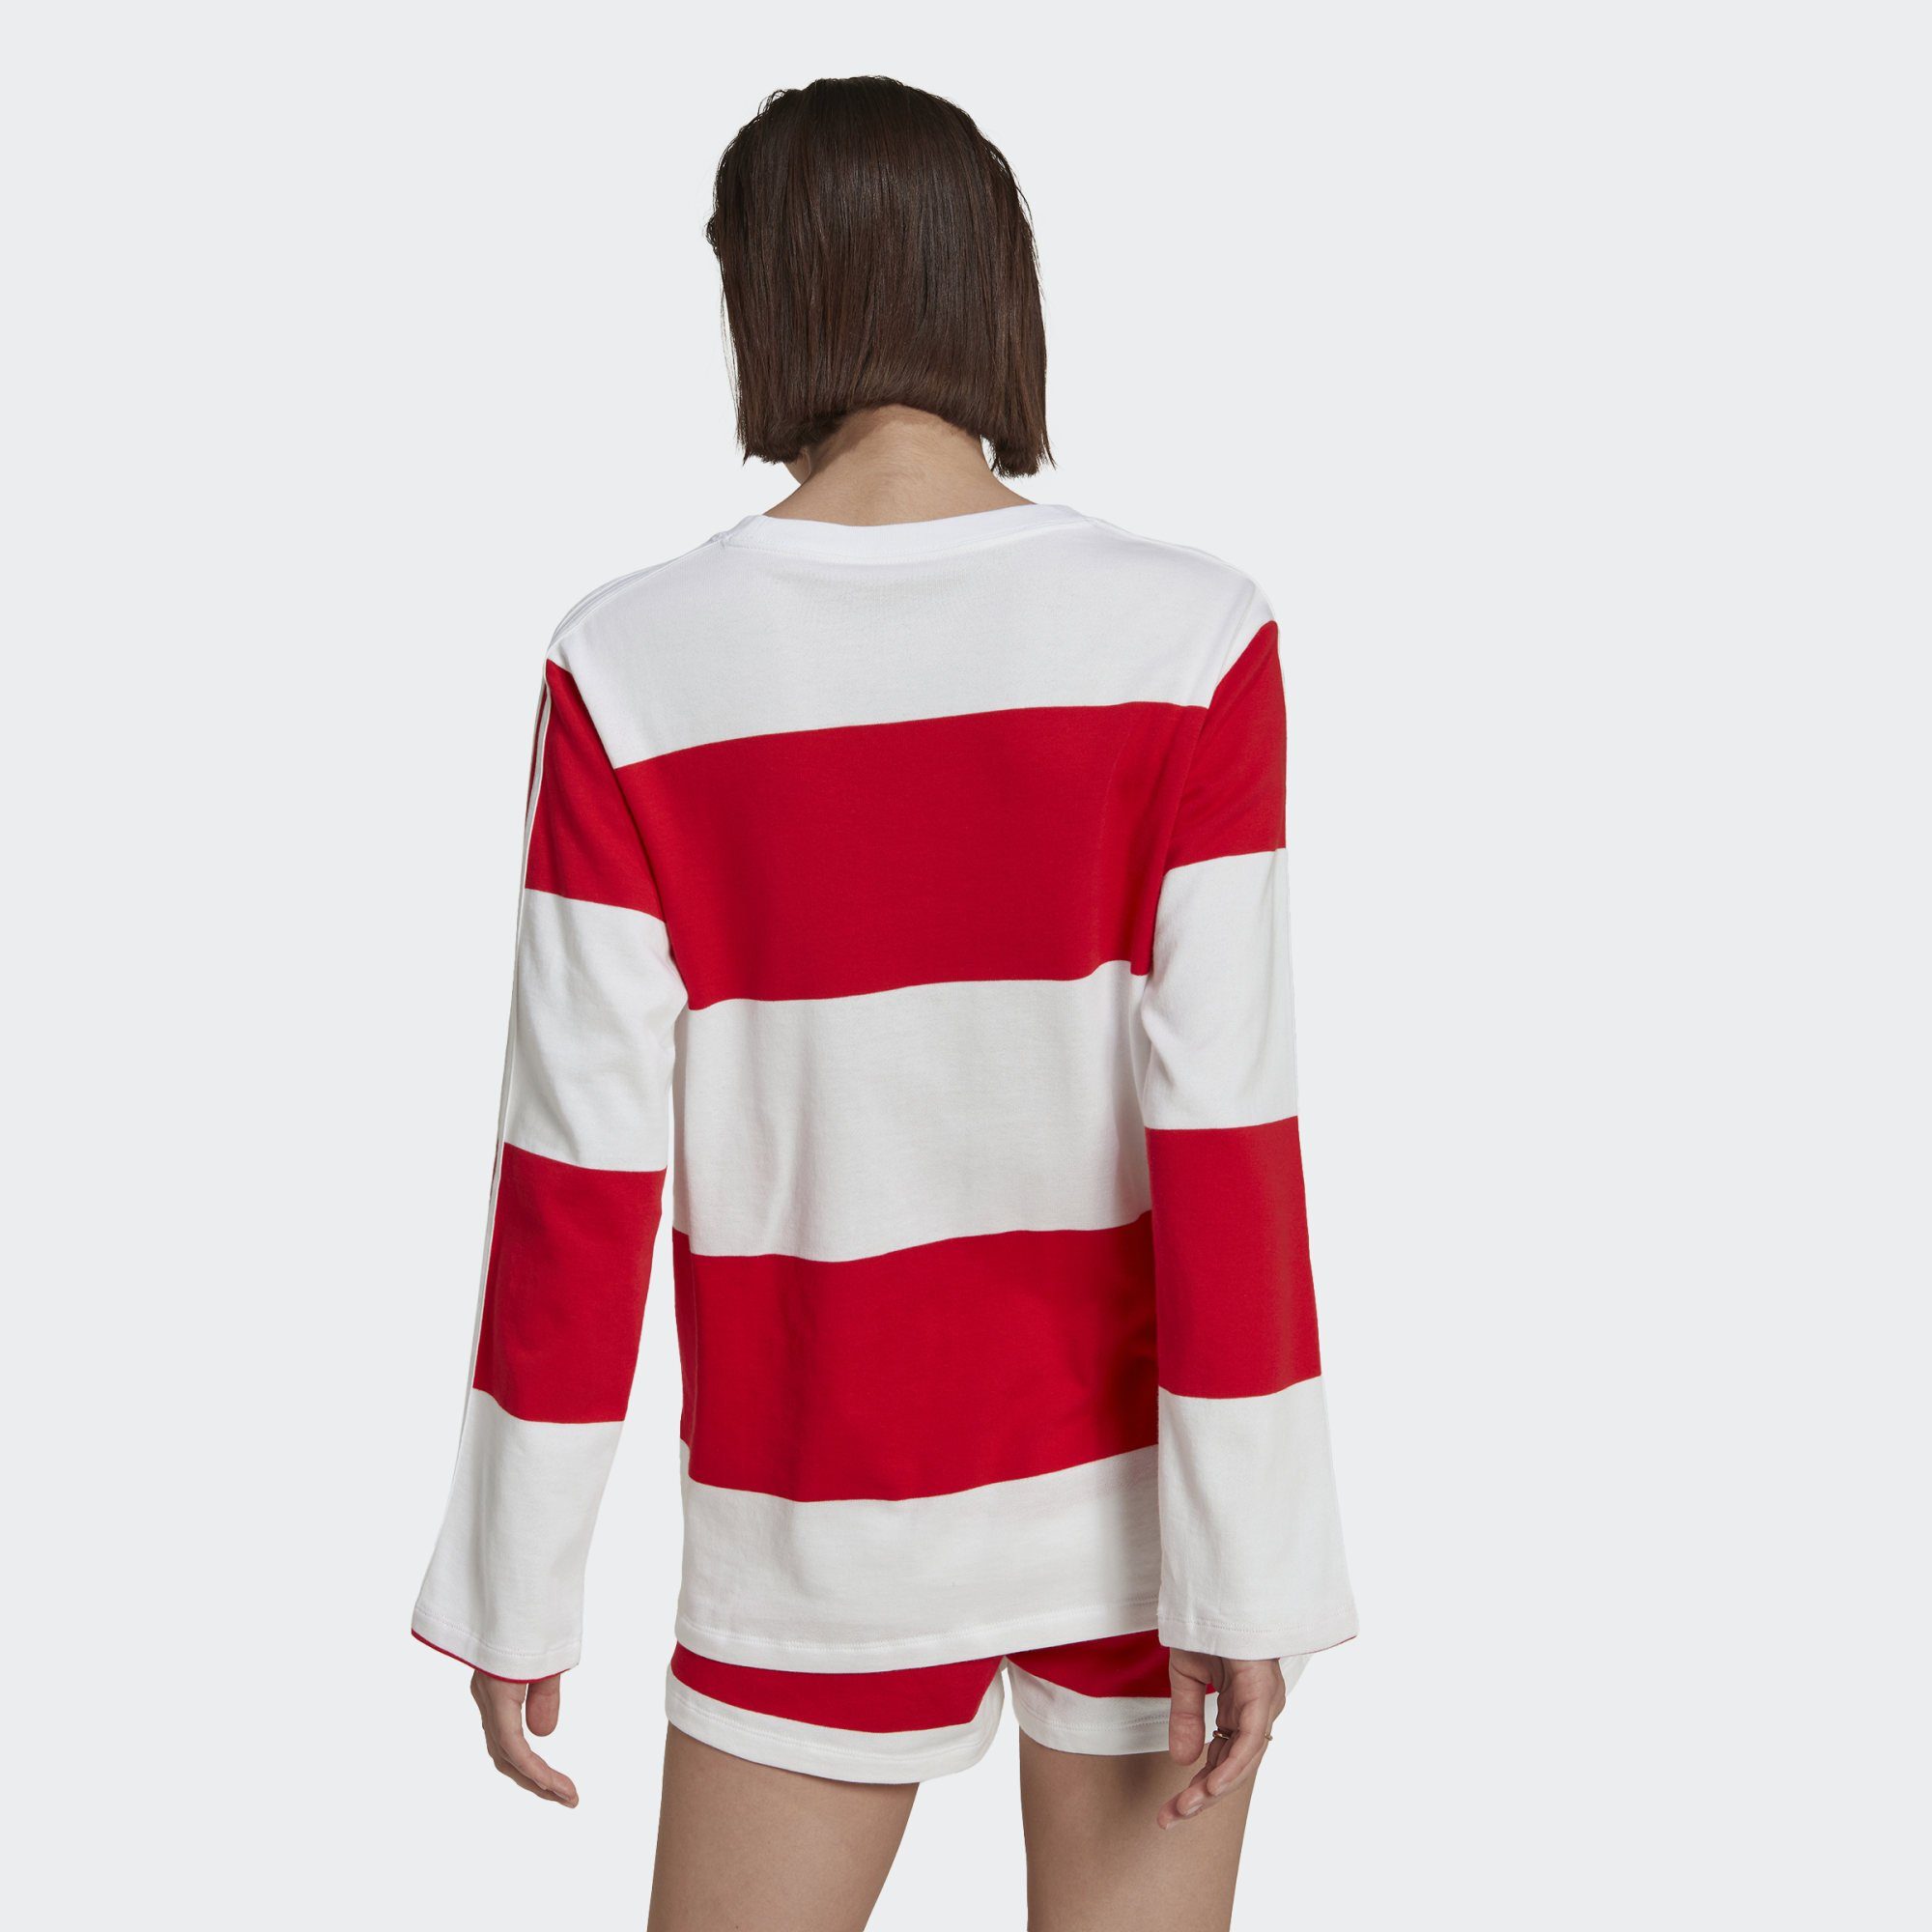 Originals / Vivid Sweatshirt LONGSLEEVE White Red adidas STRIPED